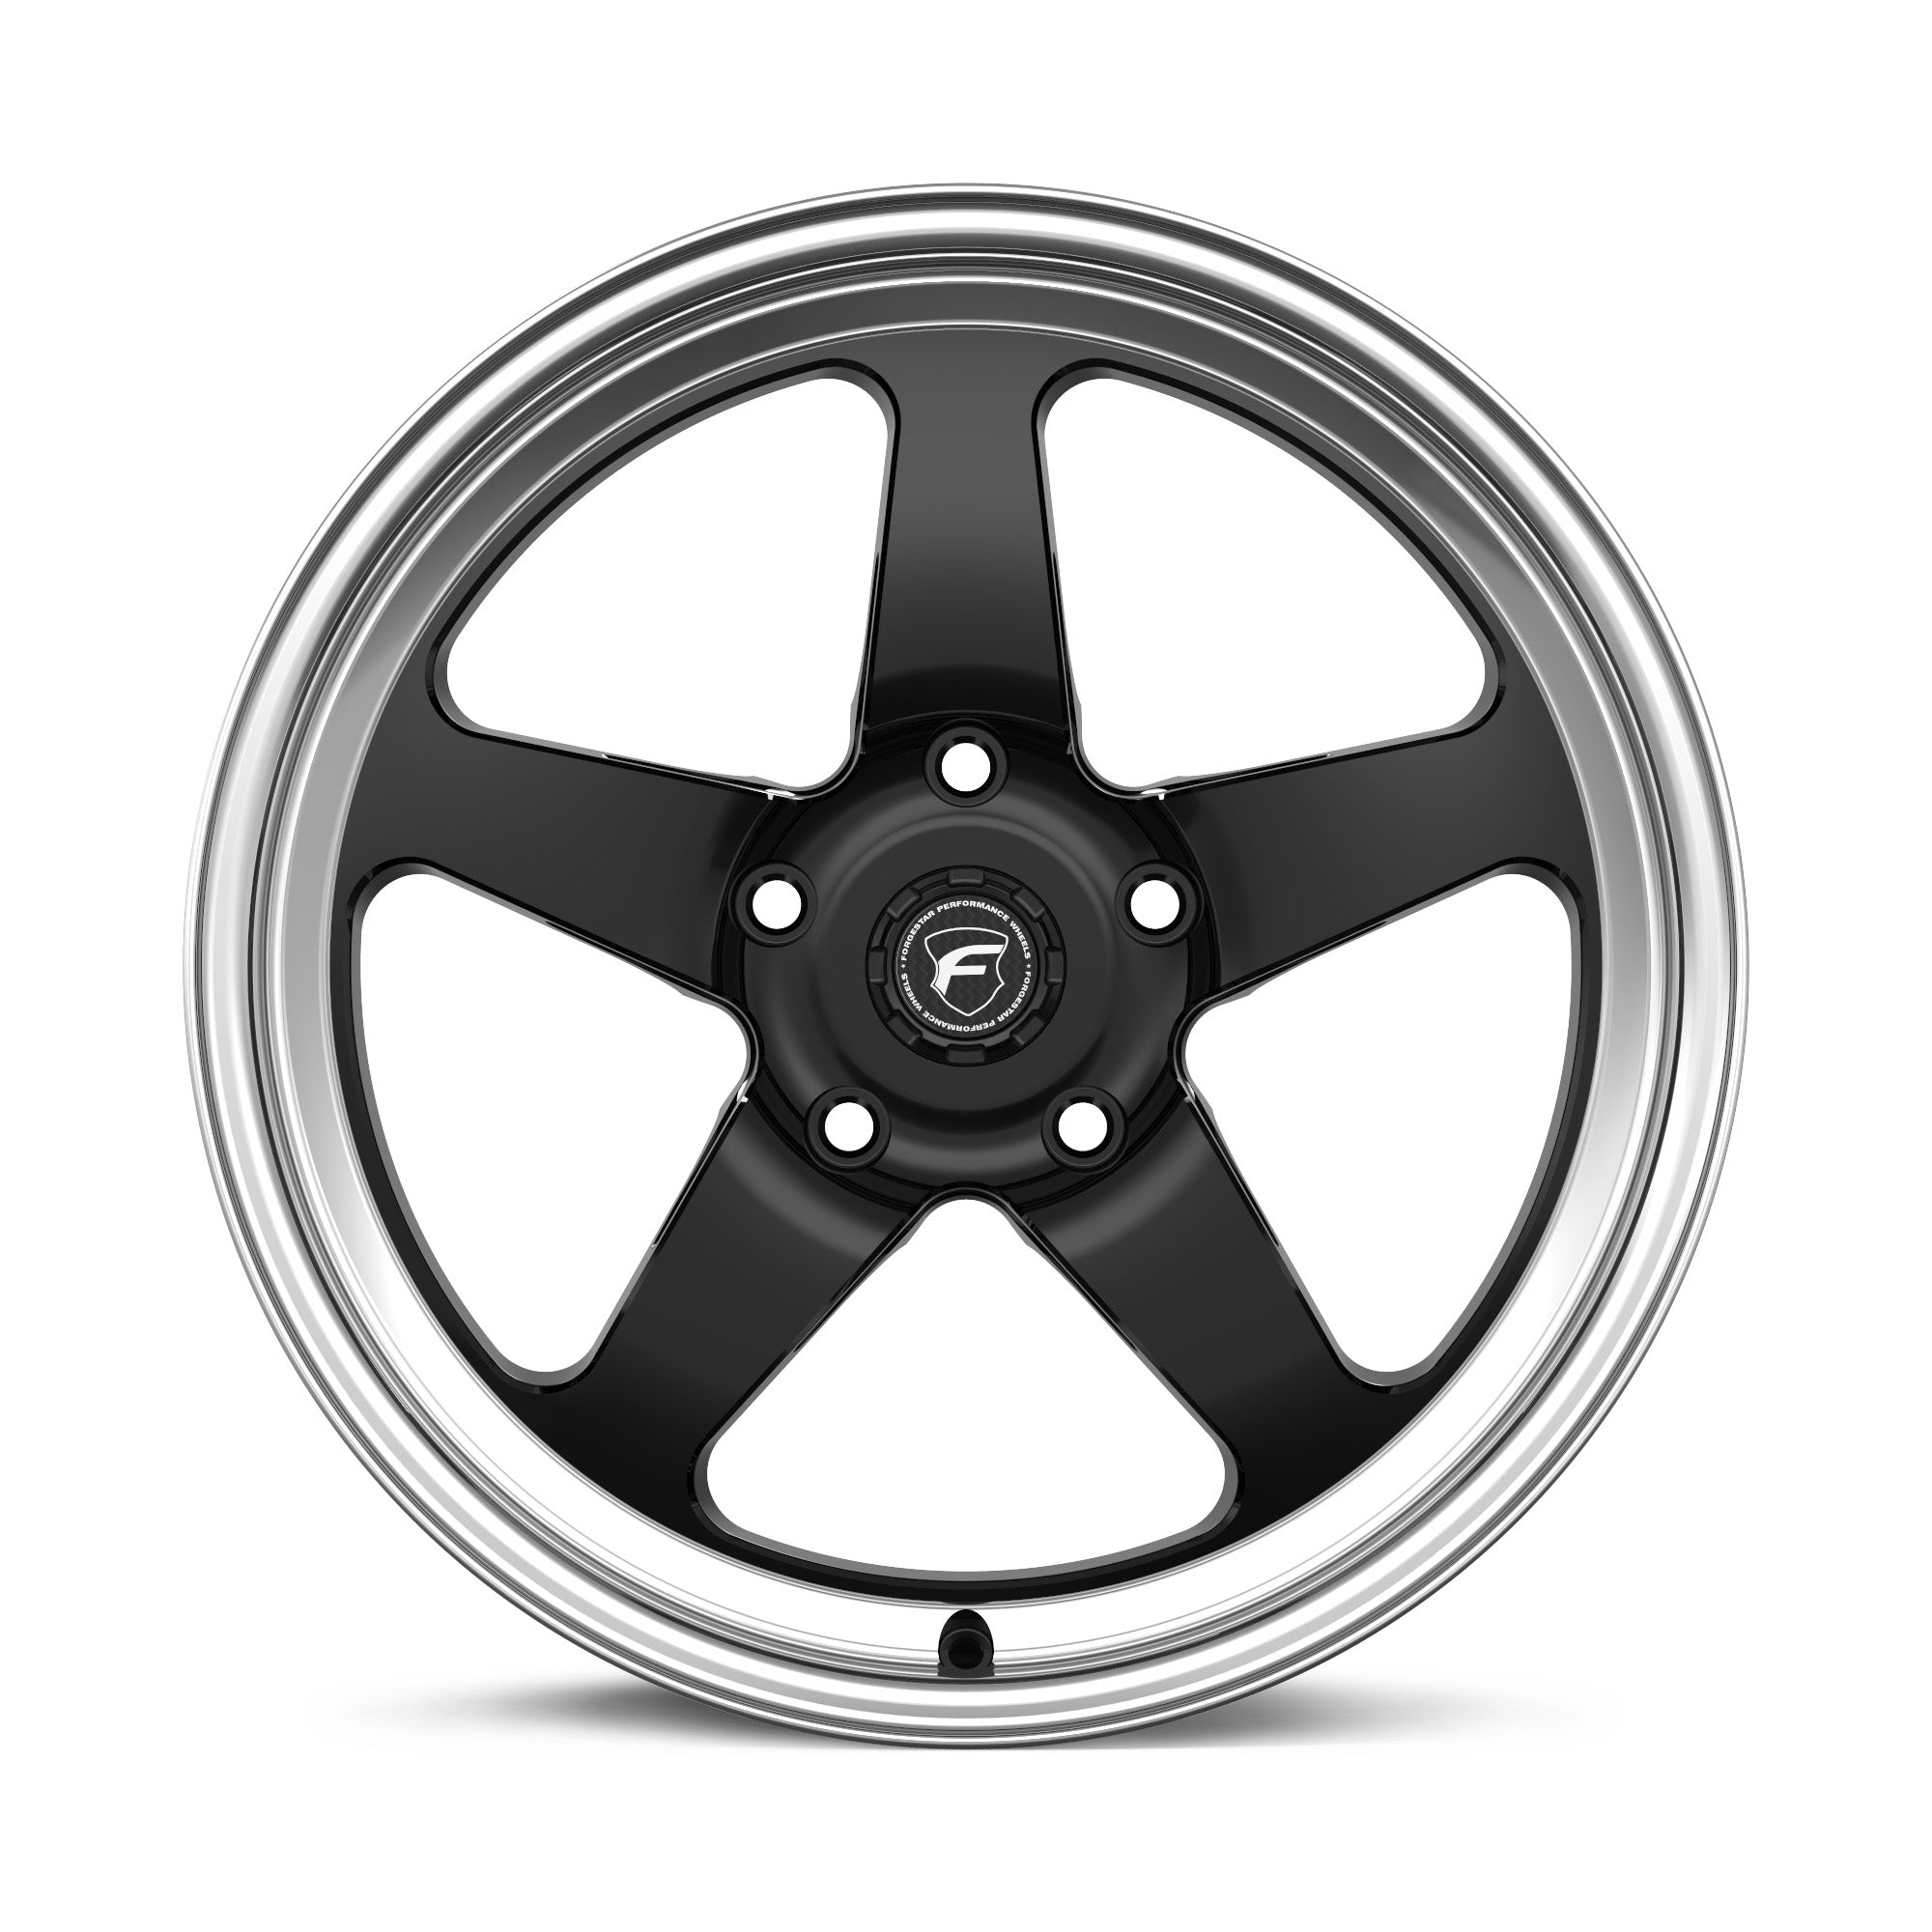 Forgestar D5 Drag Racing Wheels - Gloss Black w/Machined Lip - 15x10 - Sold Individually - Motorsports LA